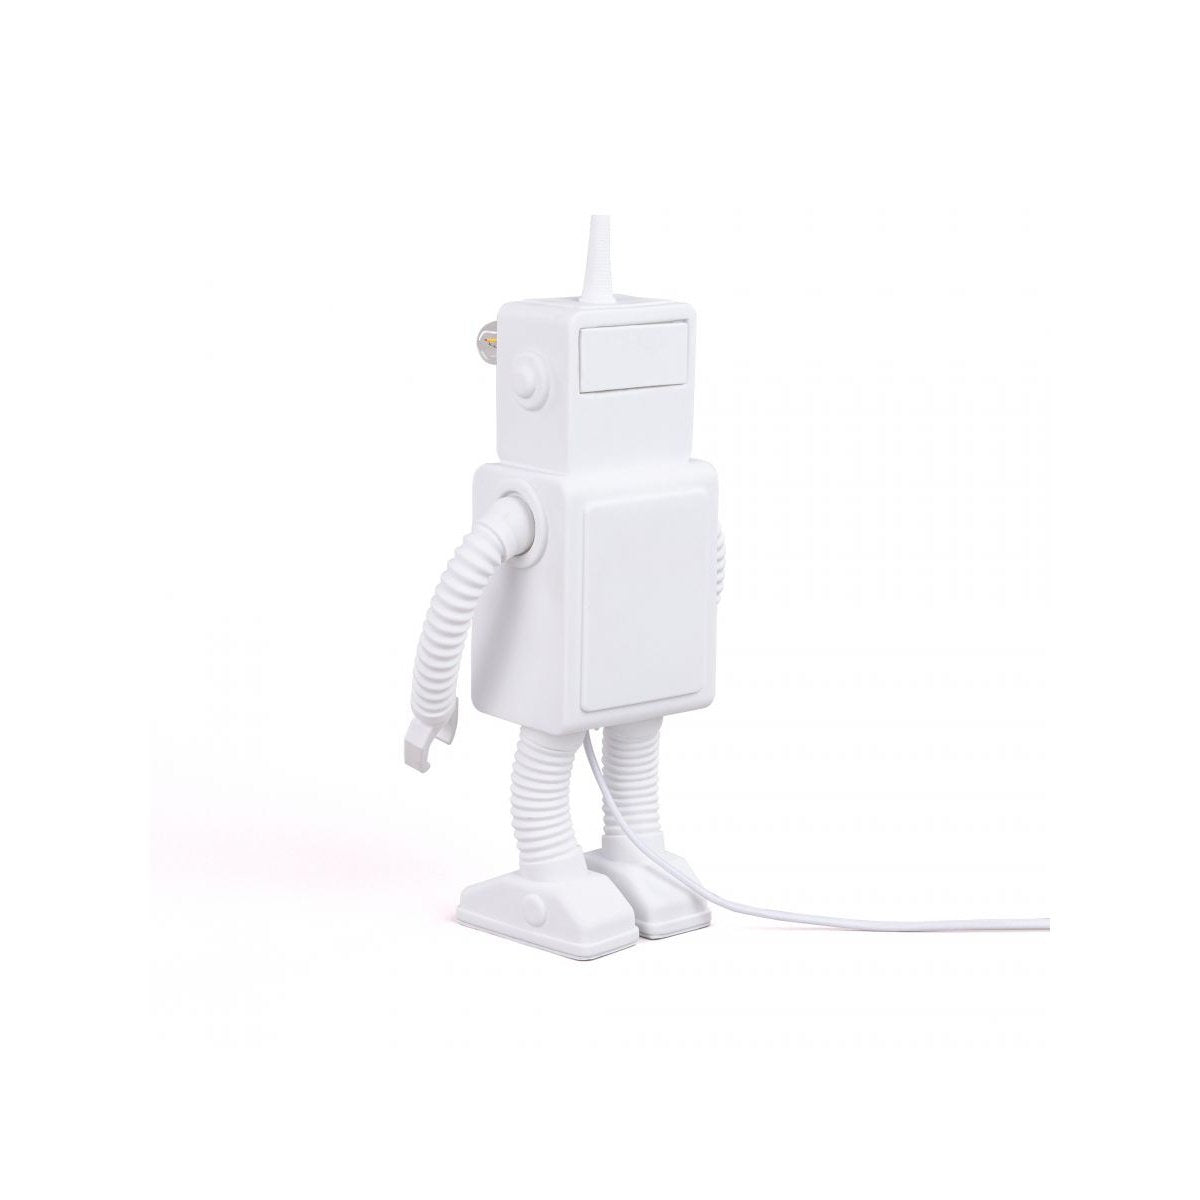 Seletti Robot Lamp by ermellino